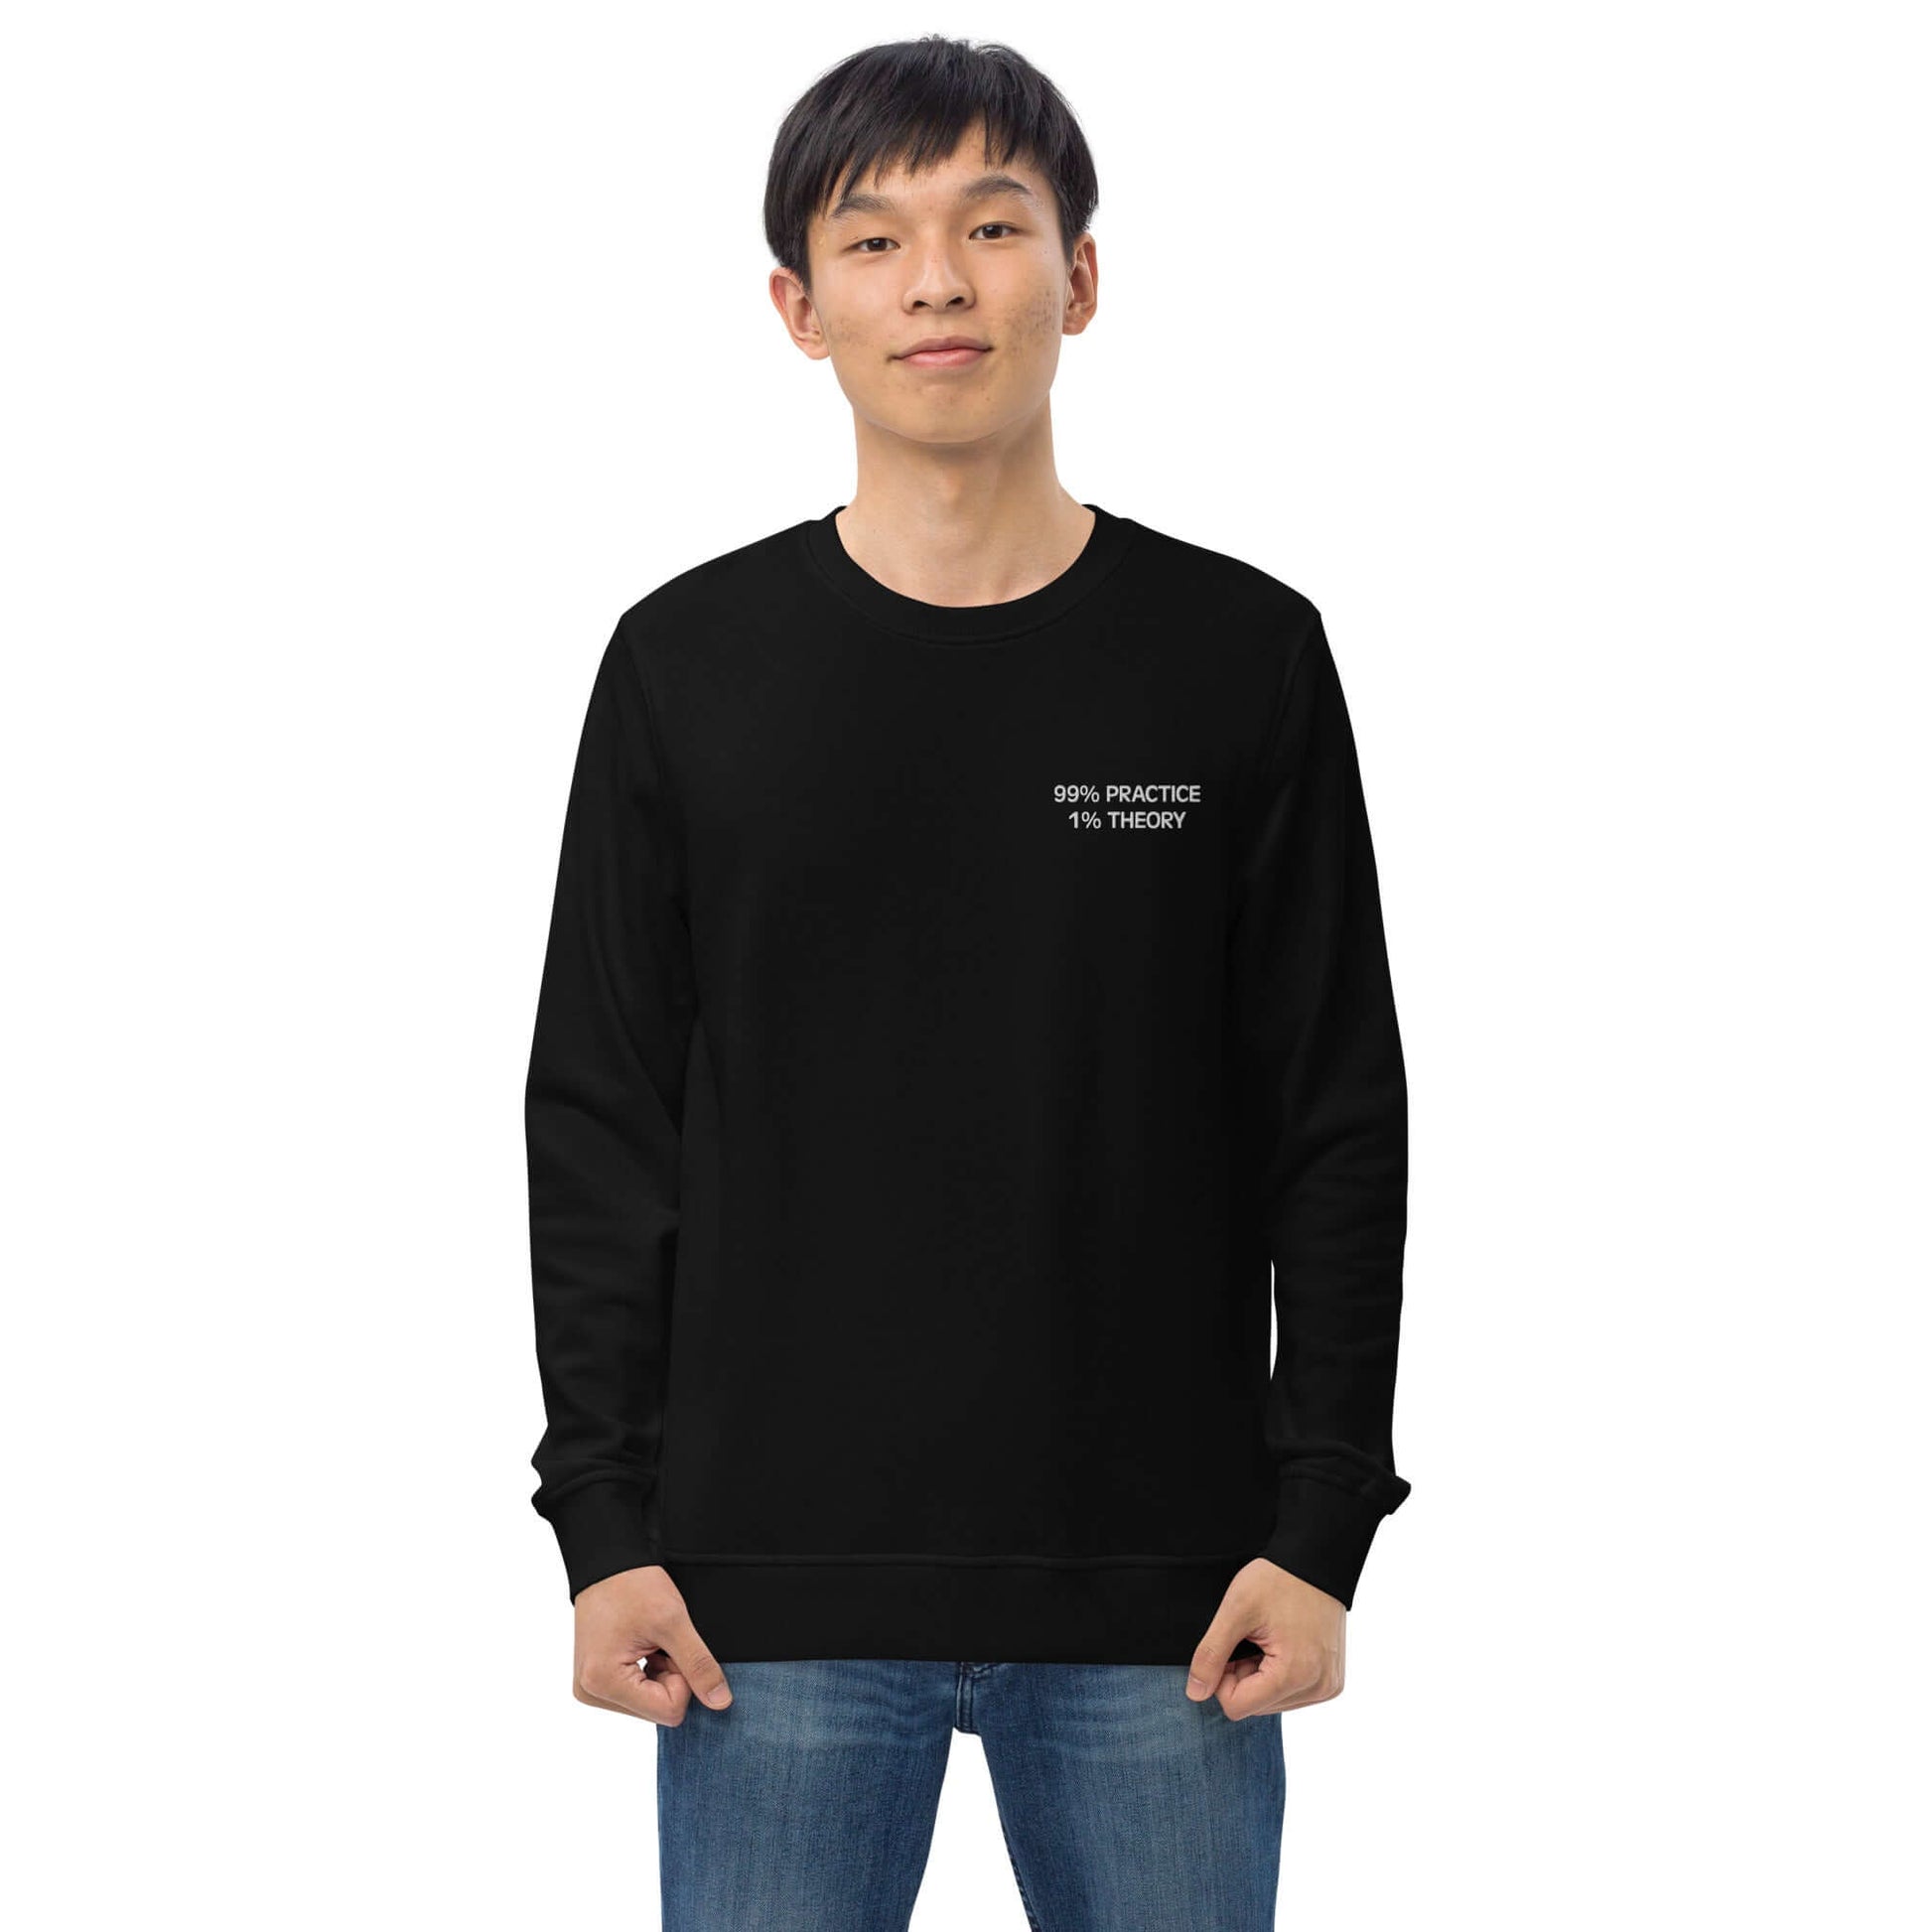 99% Practice Organic Unisex Sweatshirt Black Practice Pieces